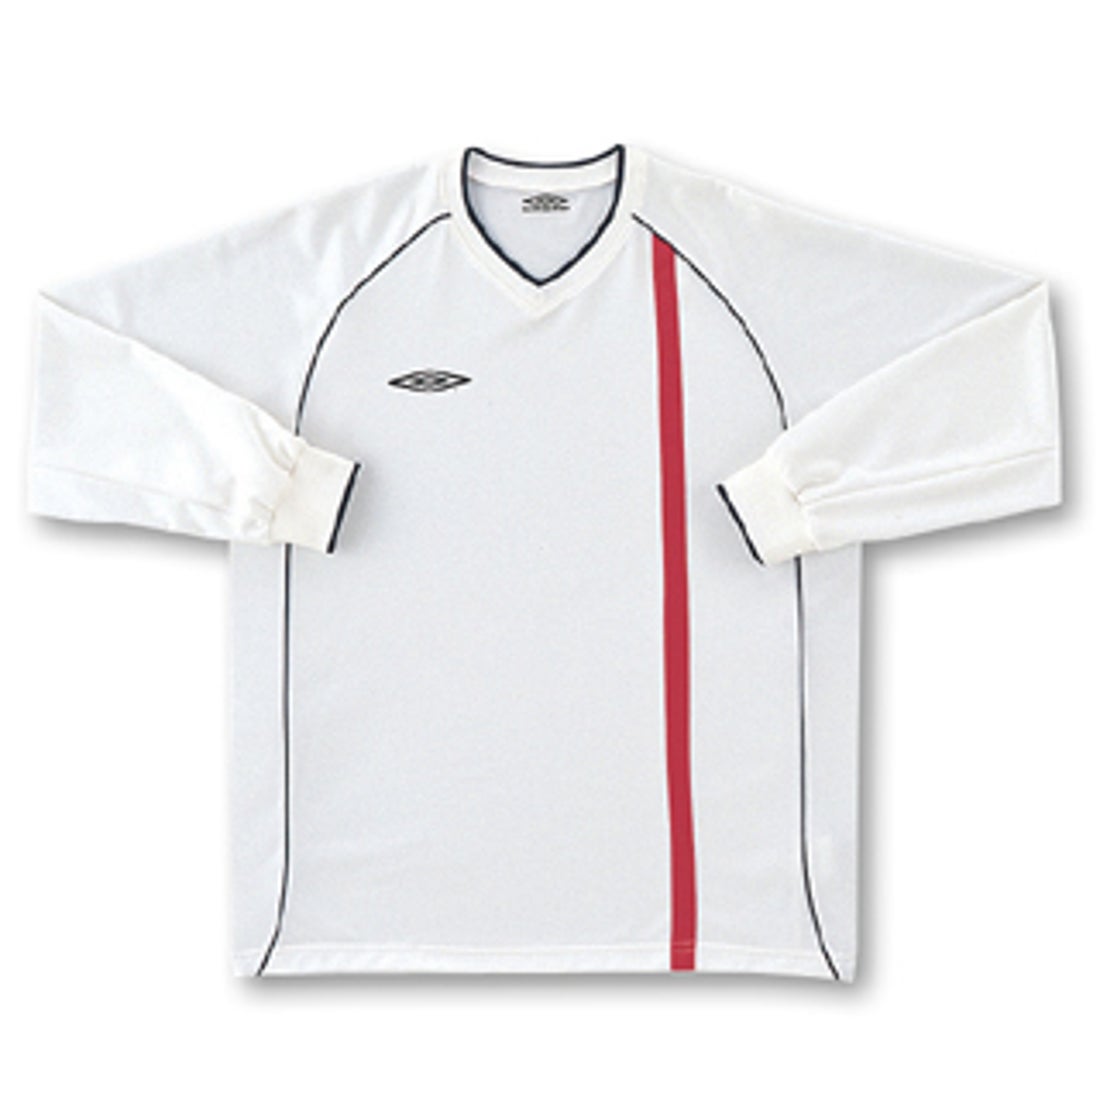 UMBRO ゲームシャツ サッカーウェア イングランド代表カラー